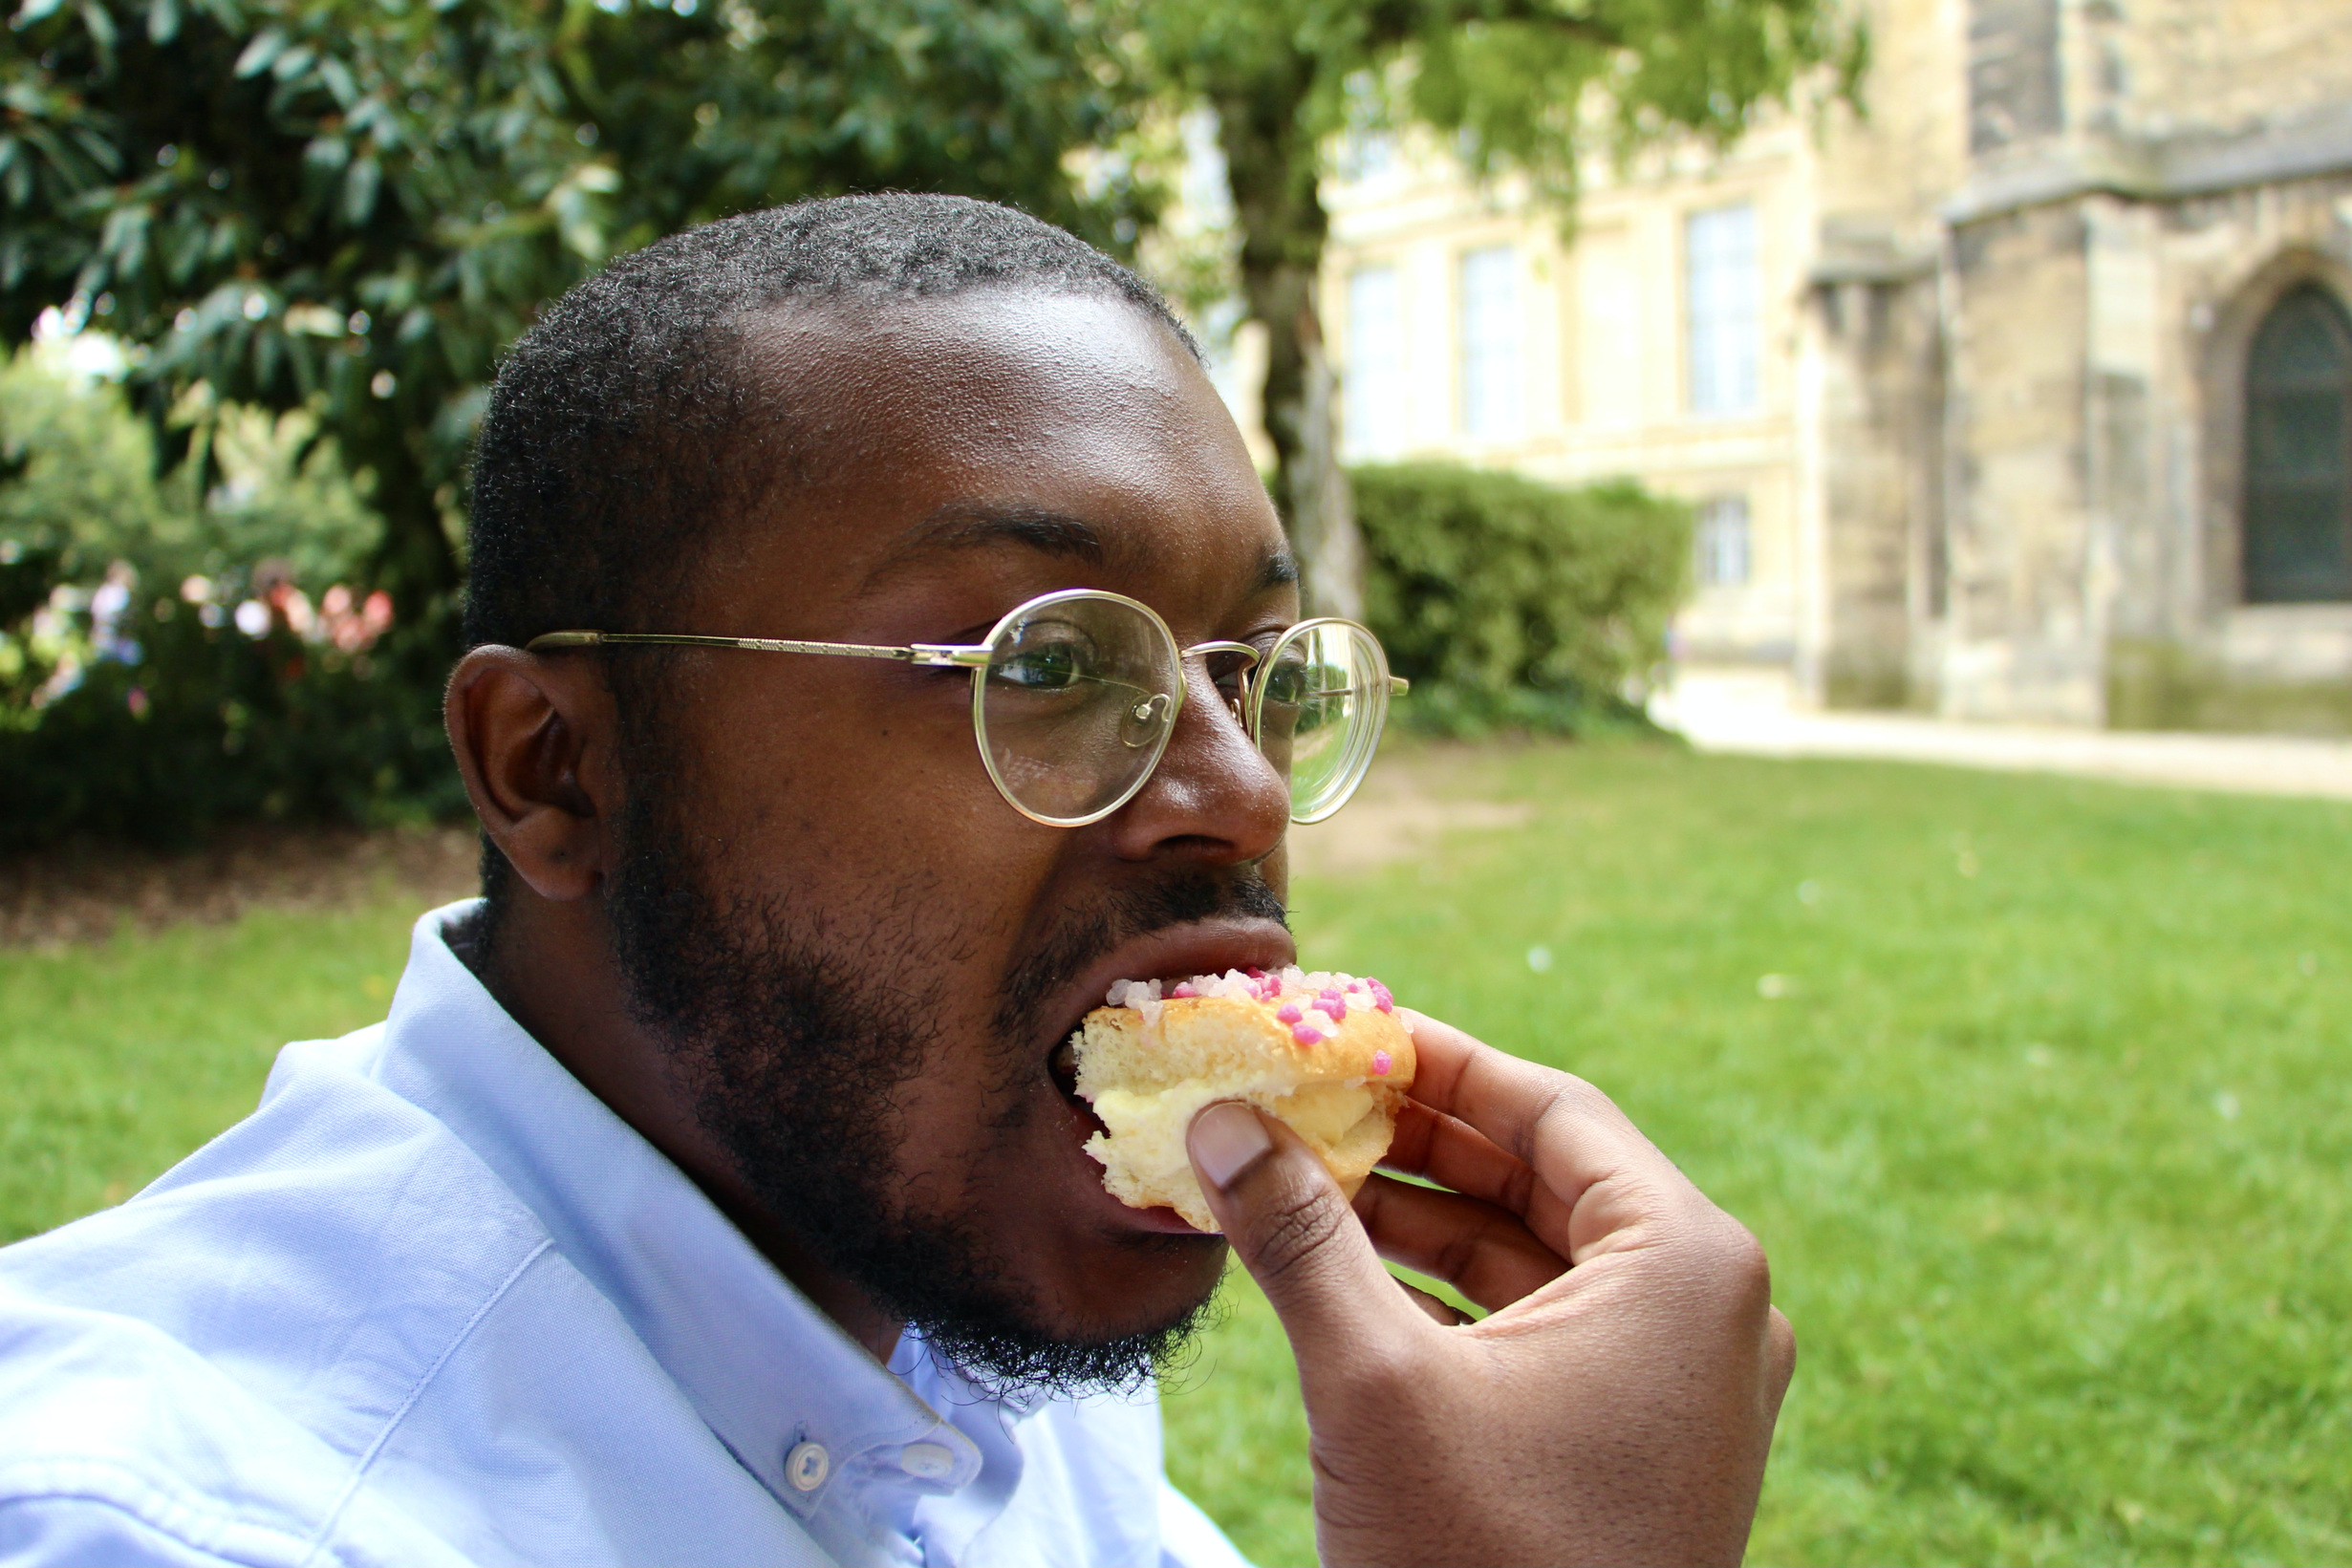 Jalen eating a slice of tropézienne in the gardens of the Cathédrale Notre-Dame de Reims.